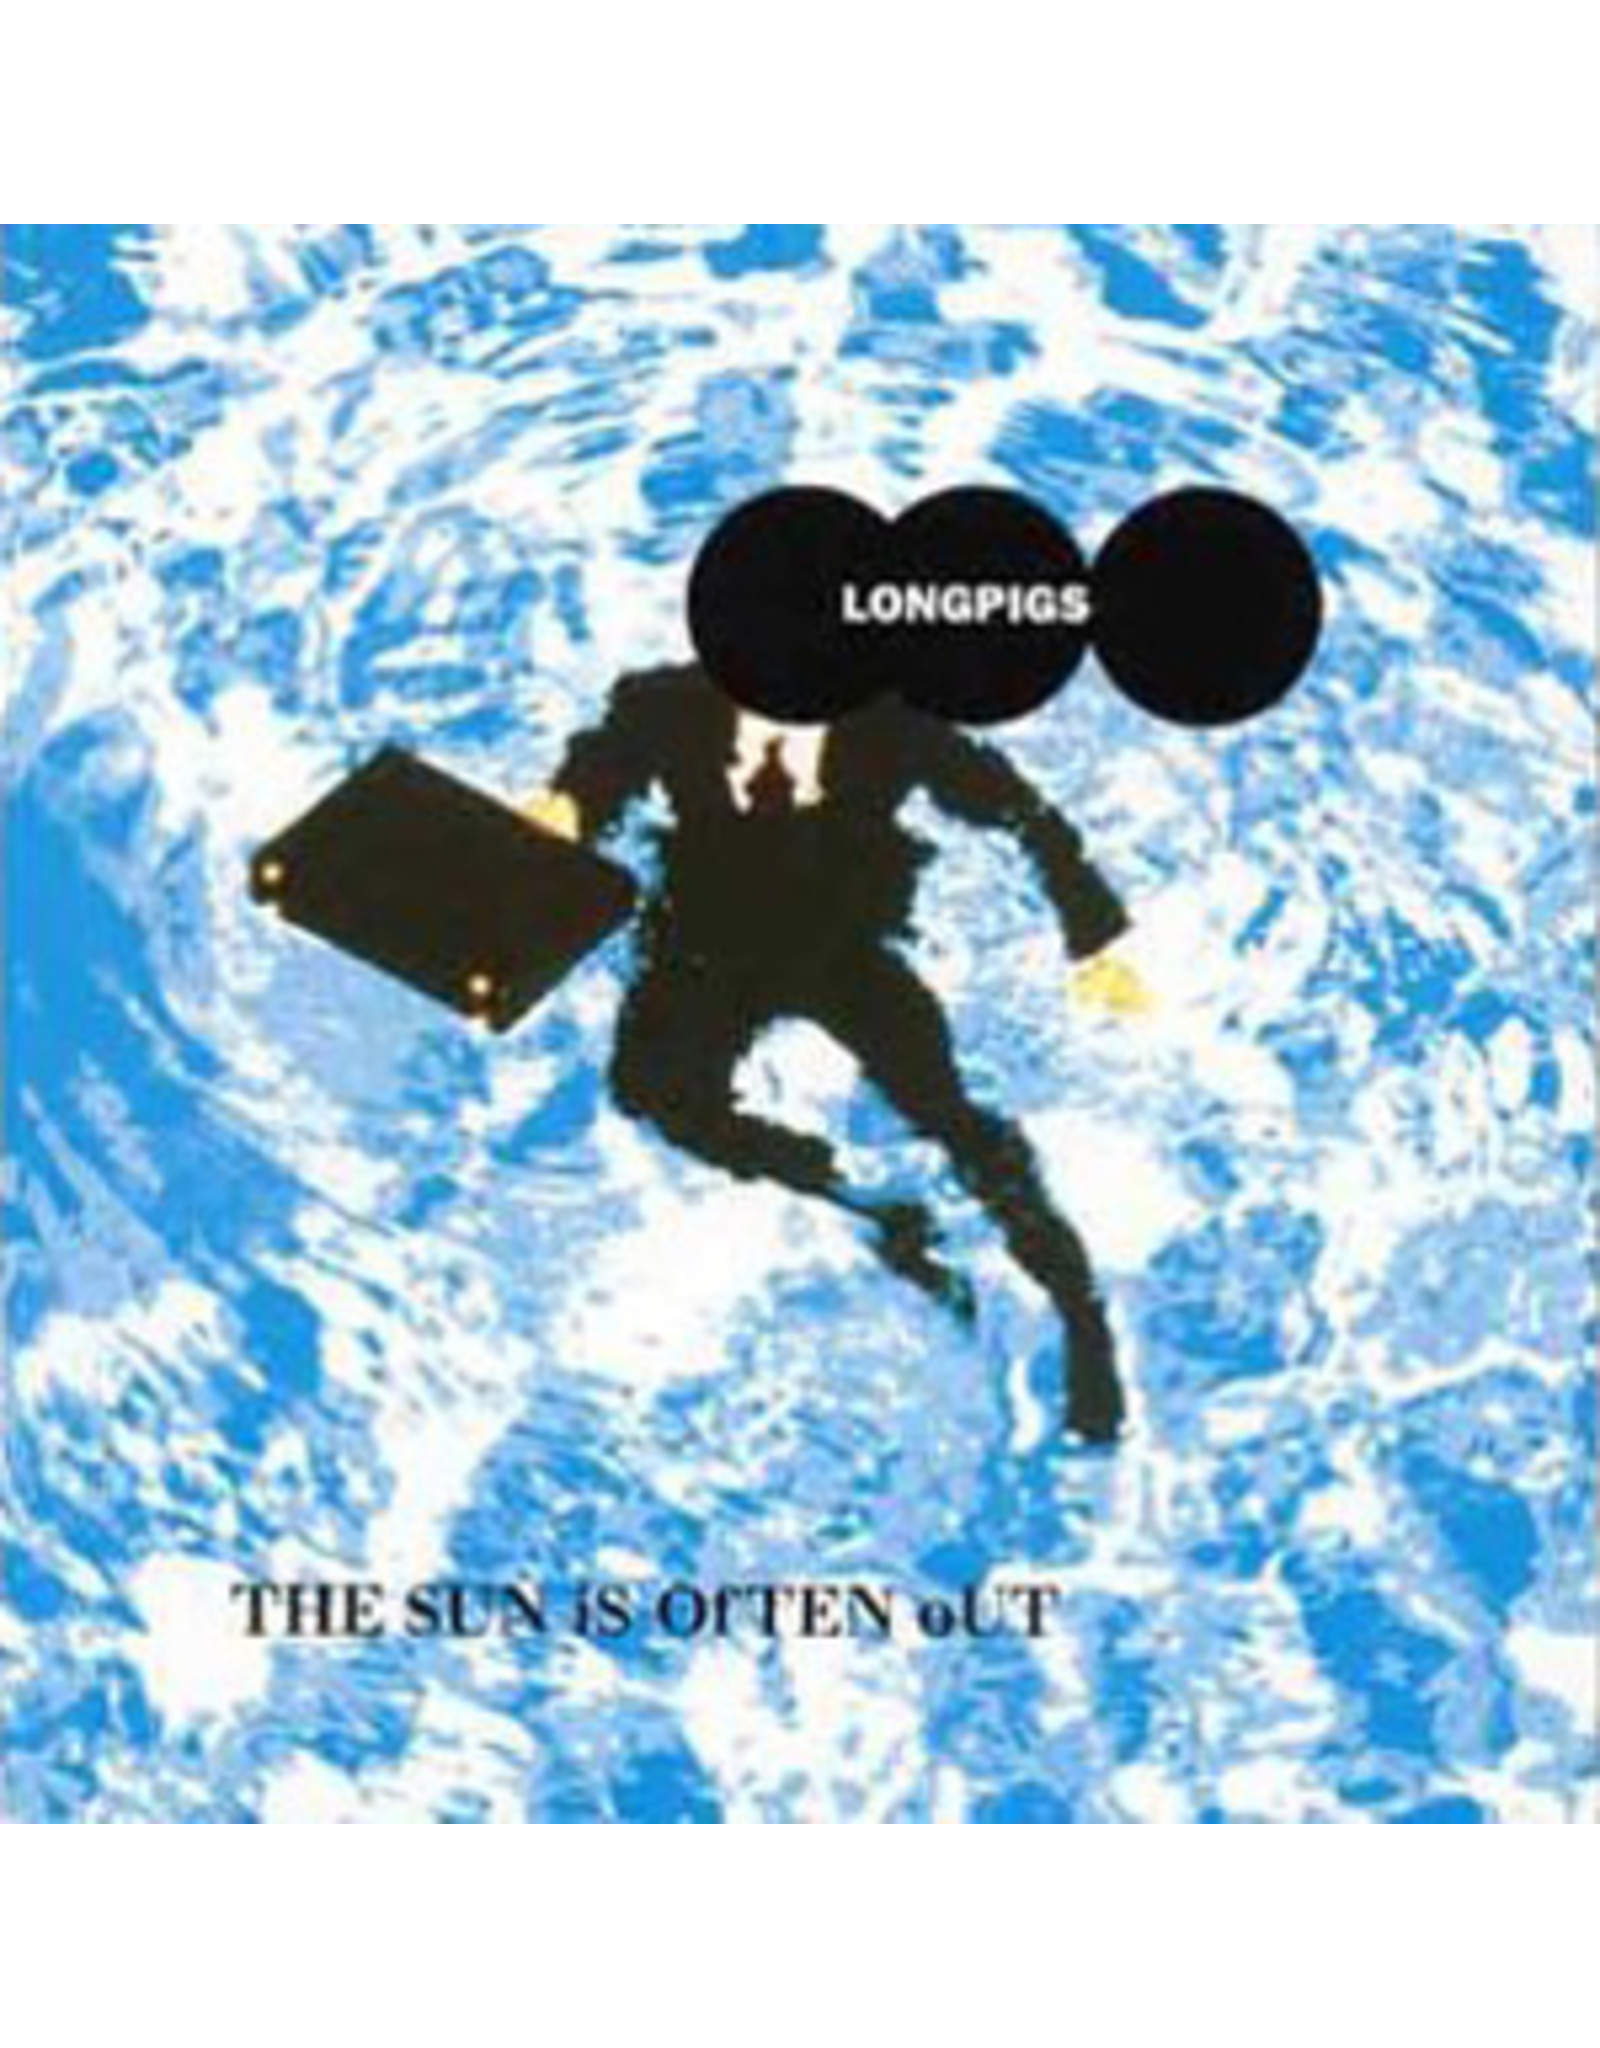 New Vinyl Longpigs - Sun Is Often Out (Colored) LP